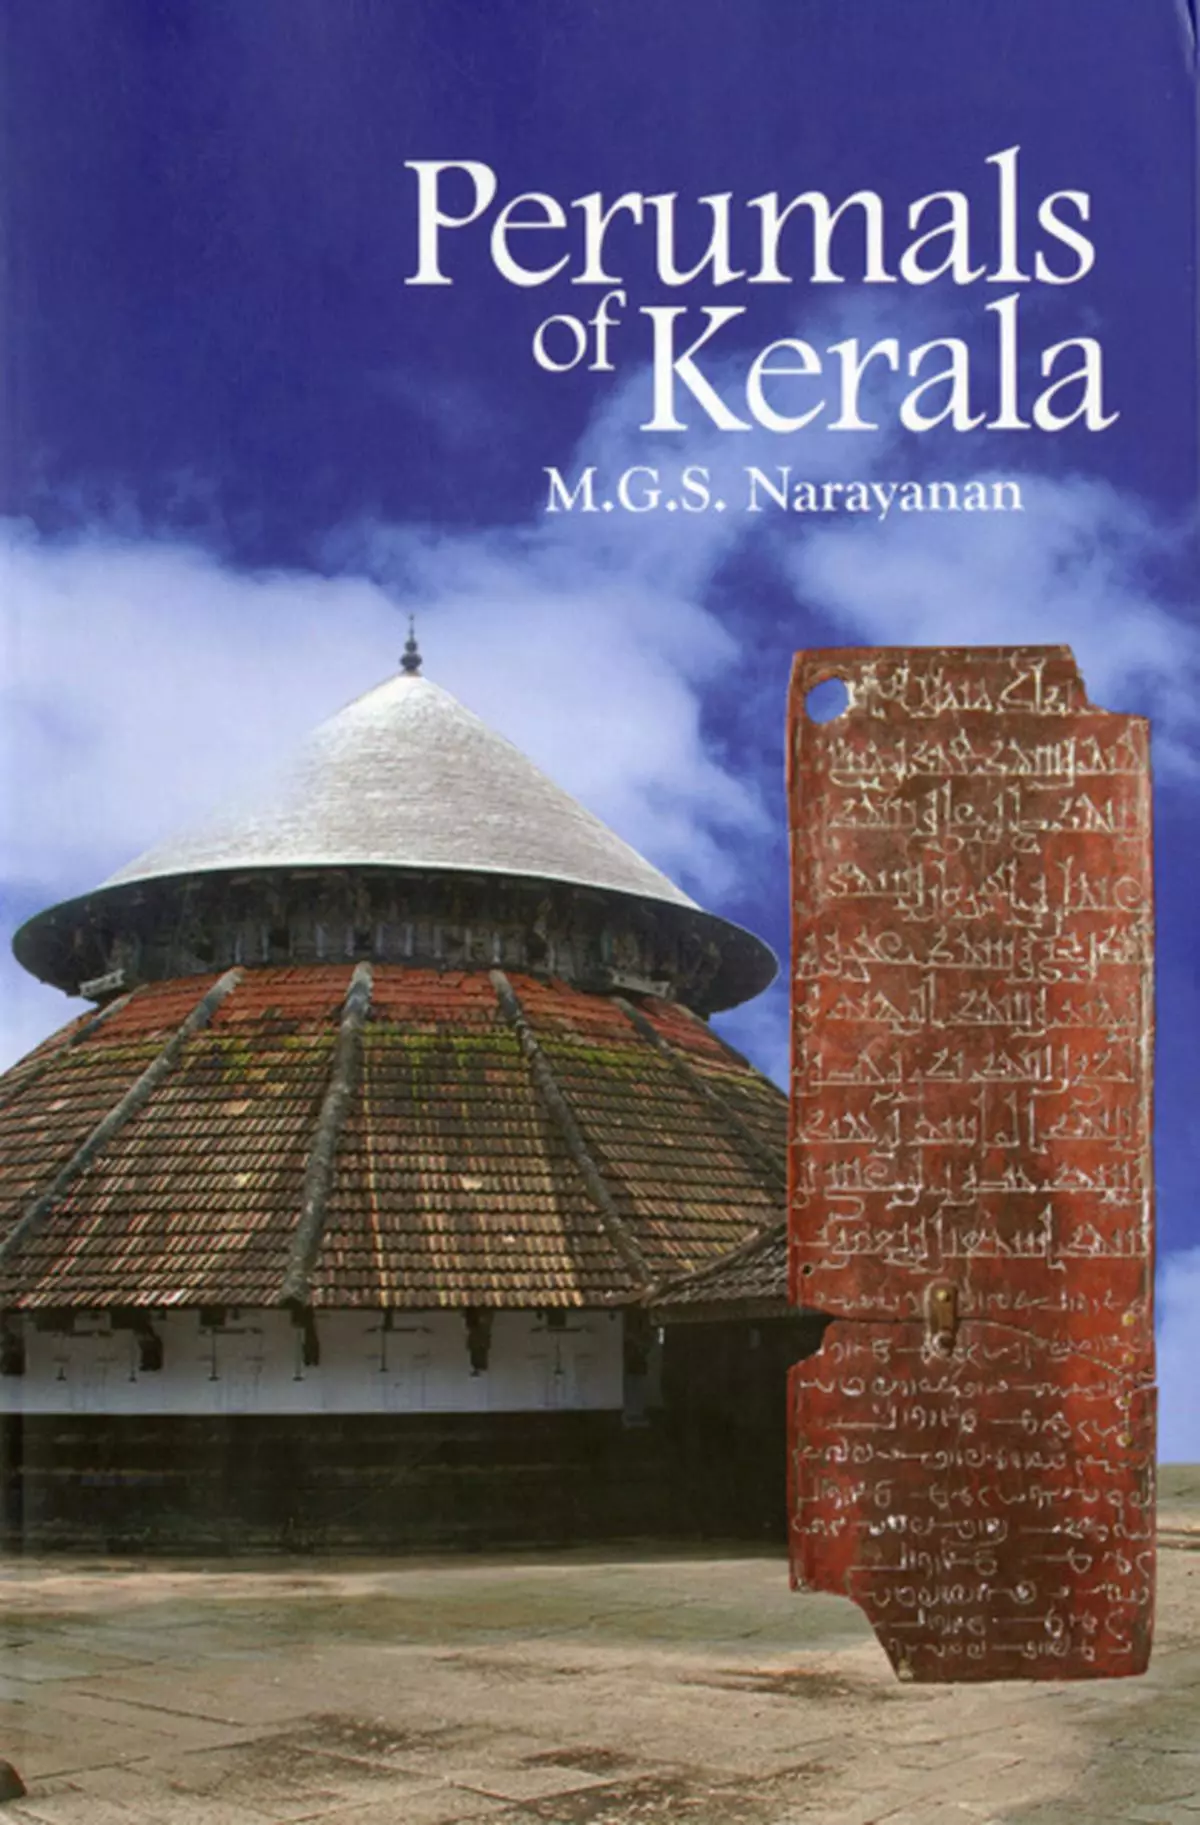 Kerala's past - Frontline